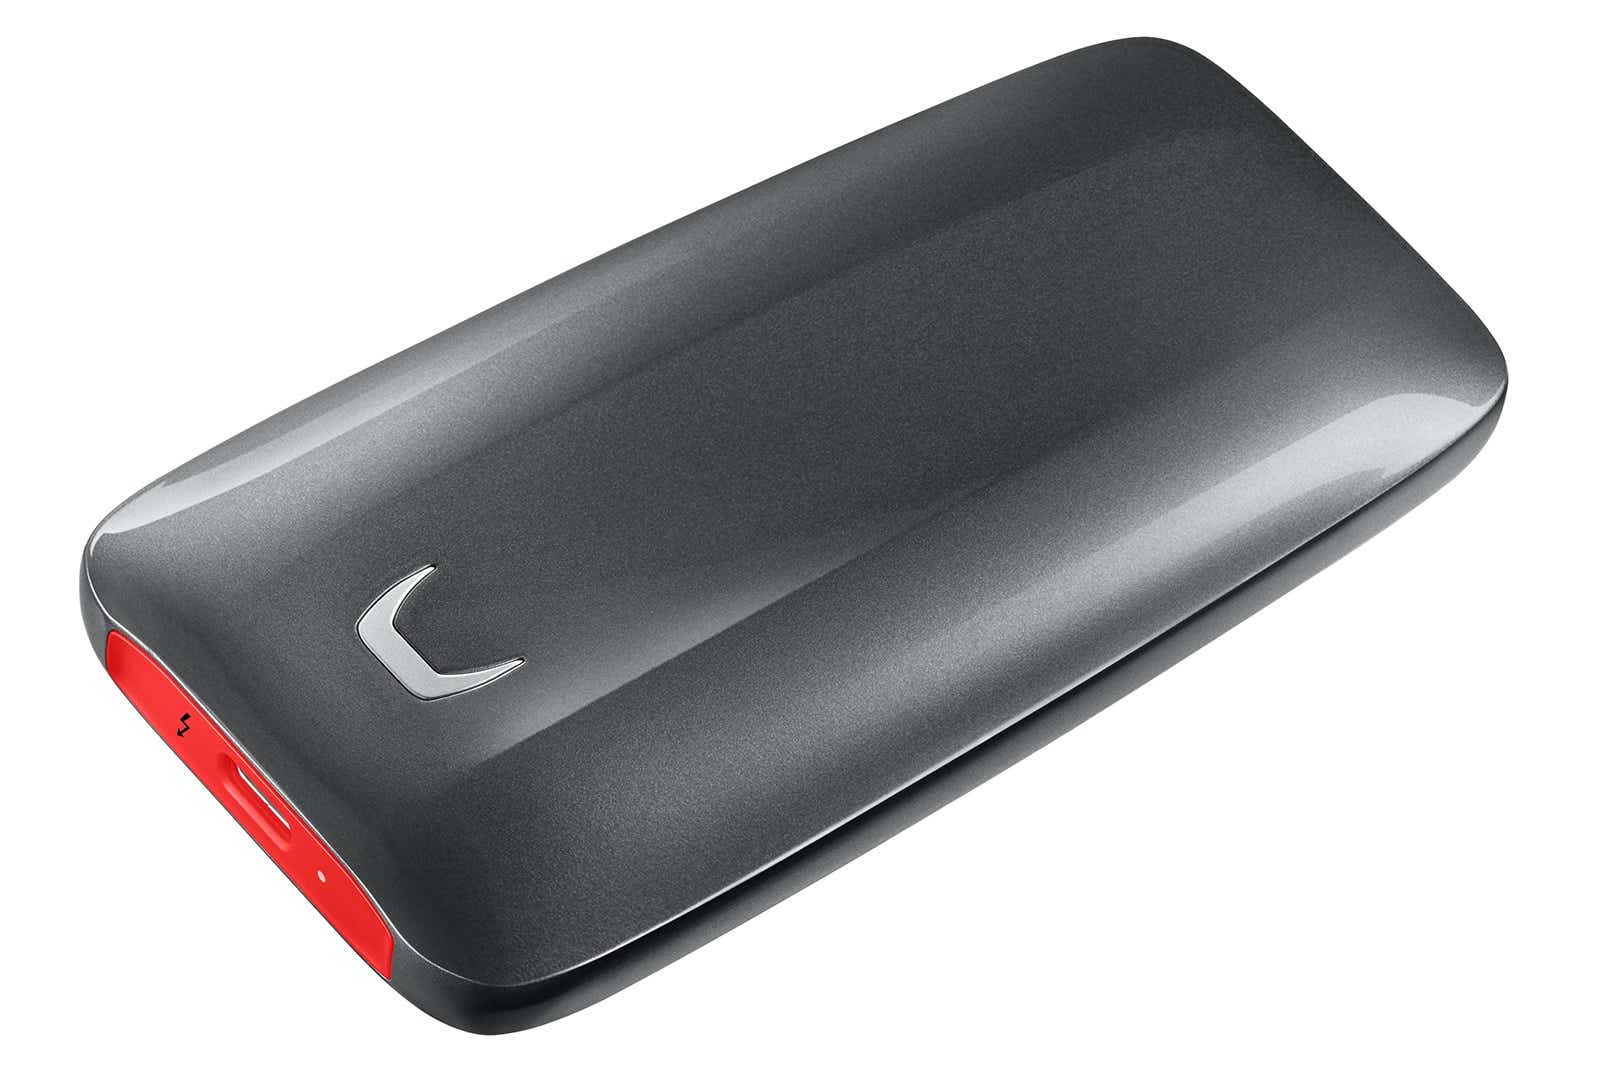 Portable SSD X5 - Best Thunderbolt 3 drive